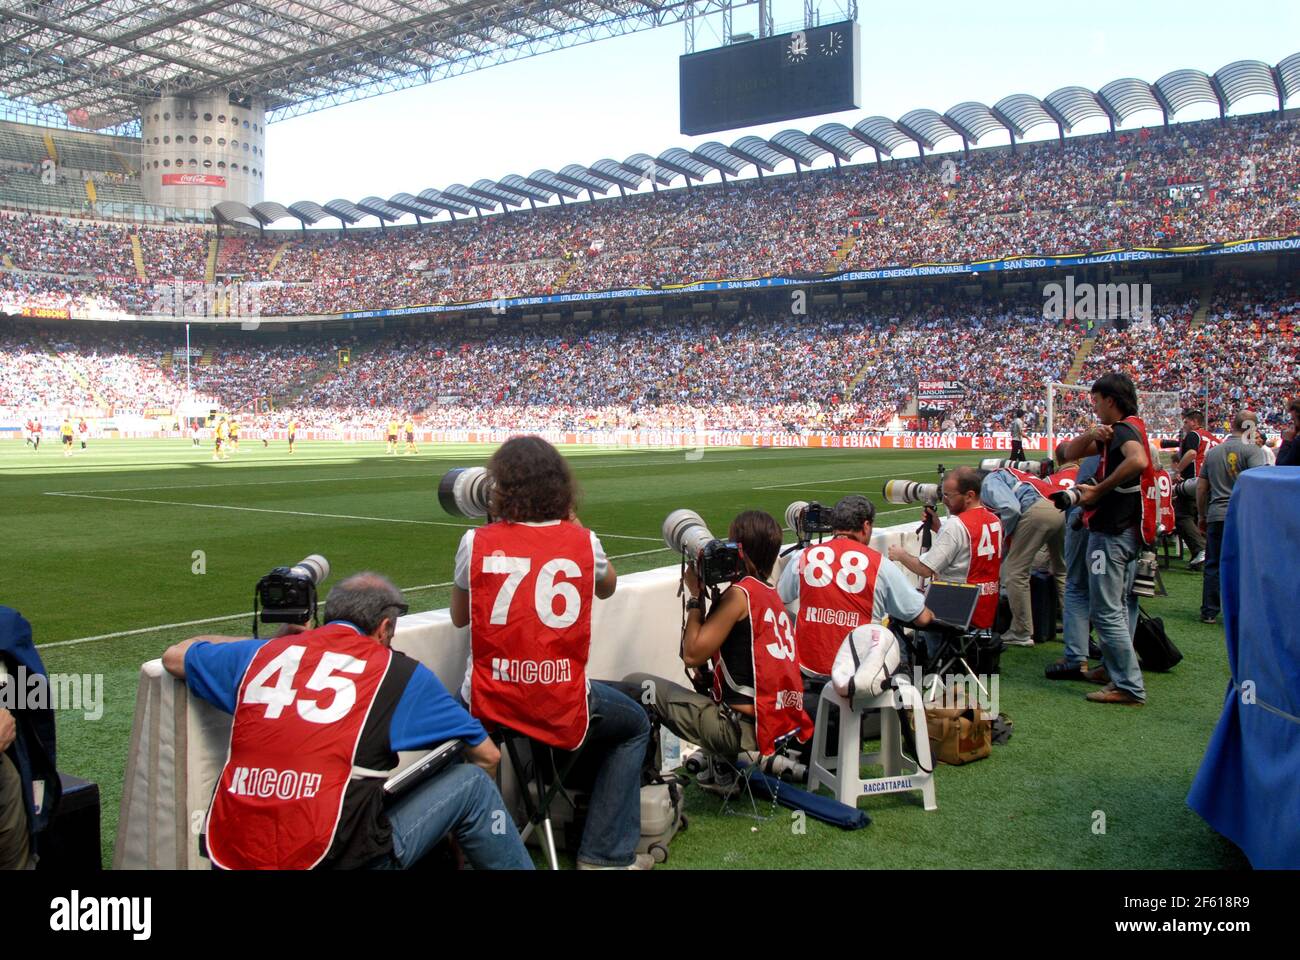 Photographers at work at the San Siro football stadium, in Milan, Italy. Stock Photo